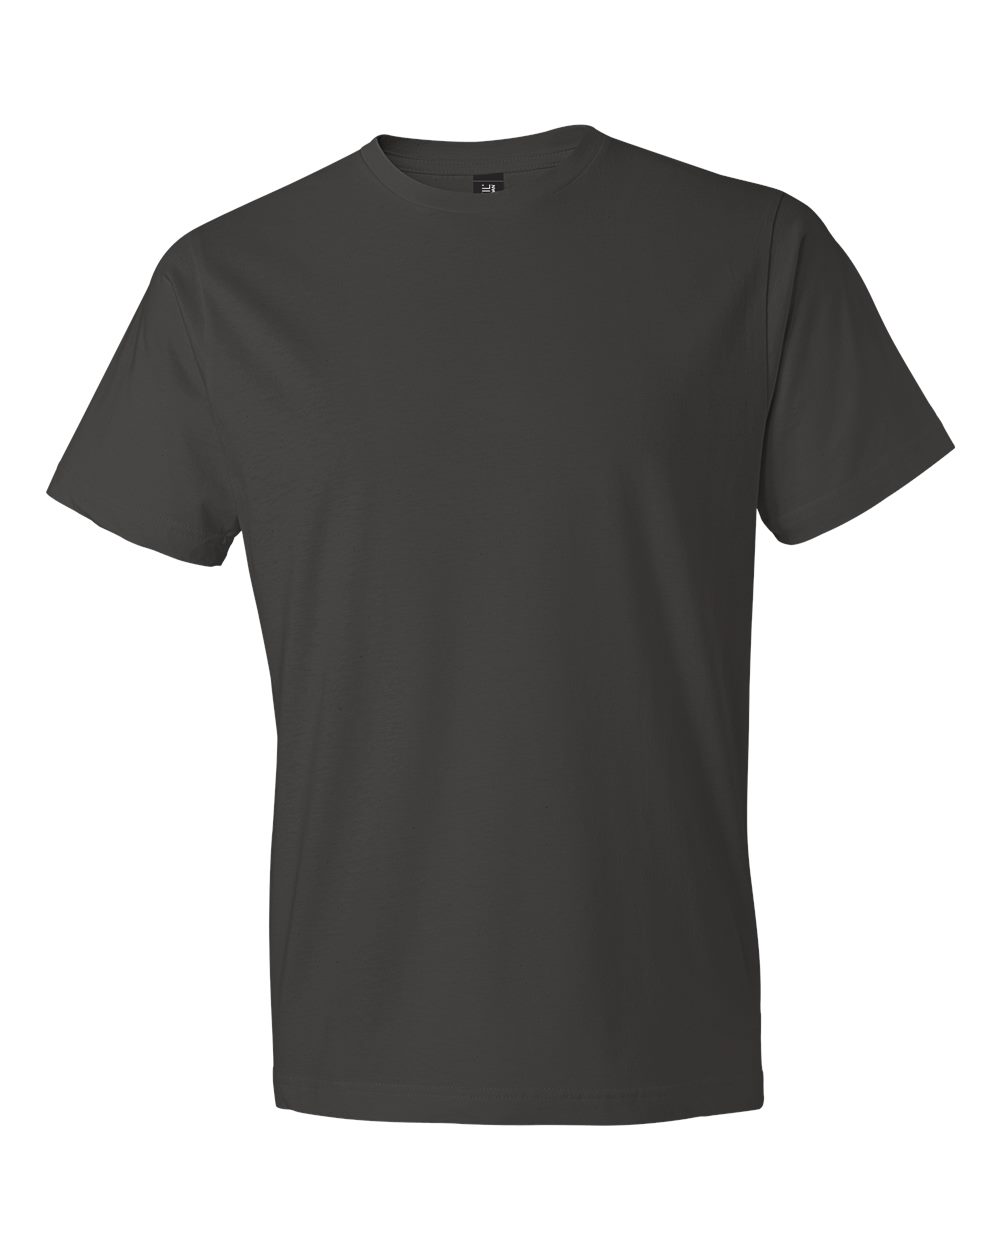 Anvil Mens Cotton Lightweight Short Sleeve Tee T Shirt Plain 980 up to ...